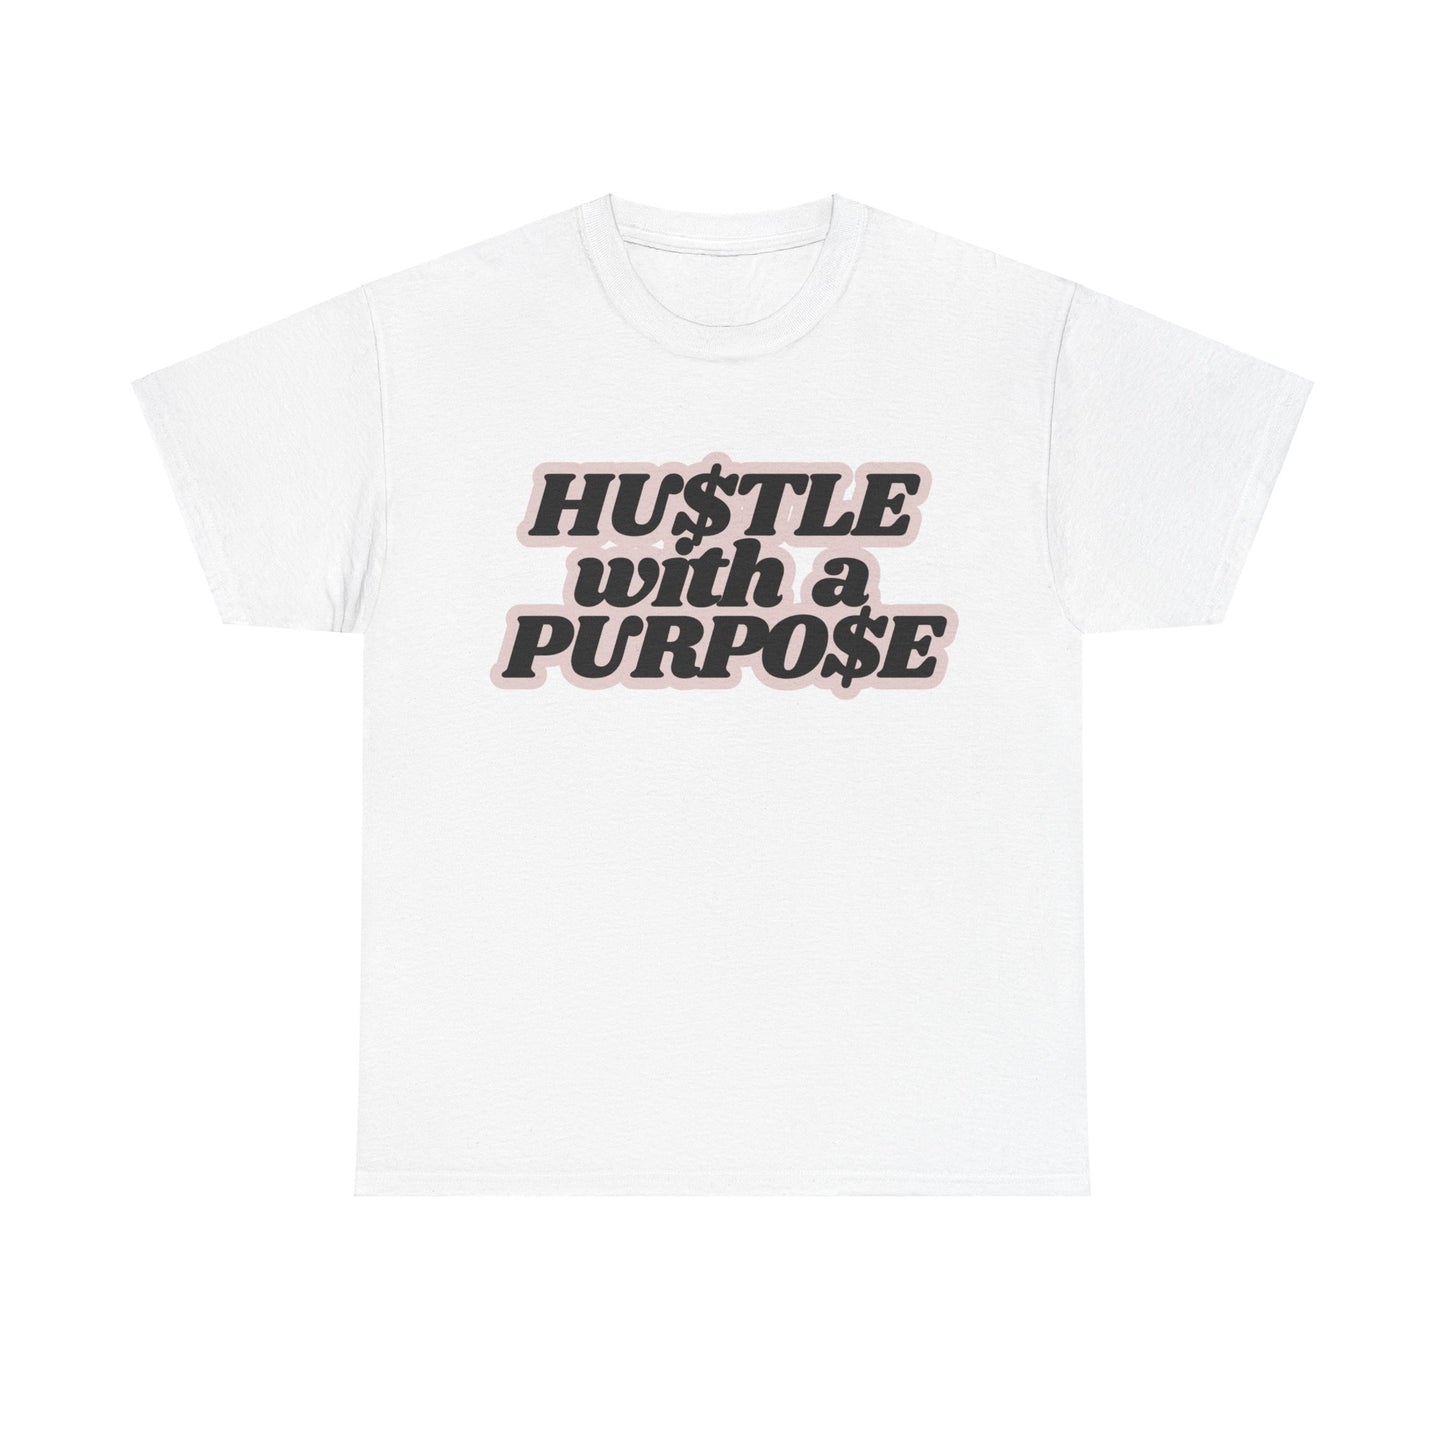 Hustle with Purpose